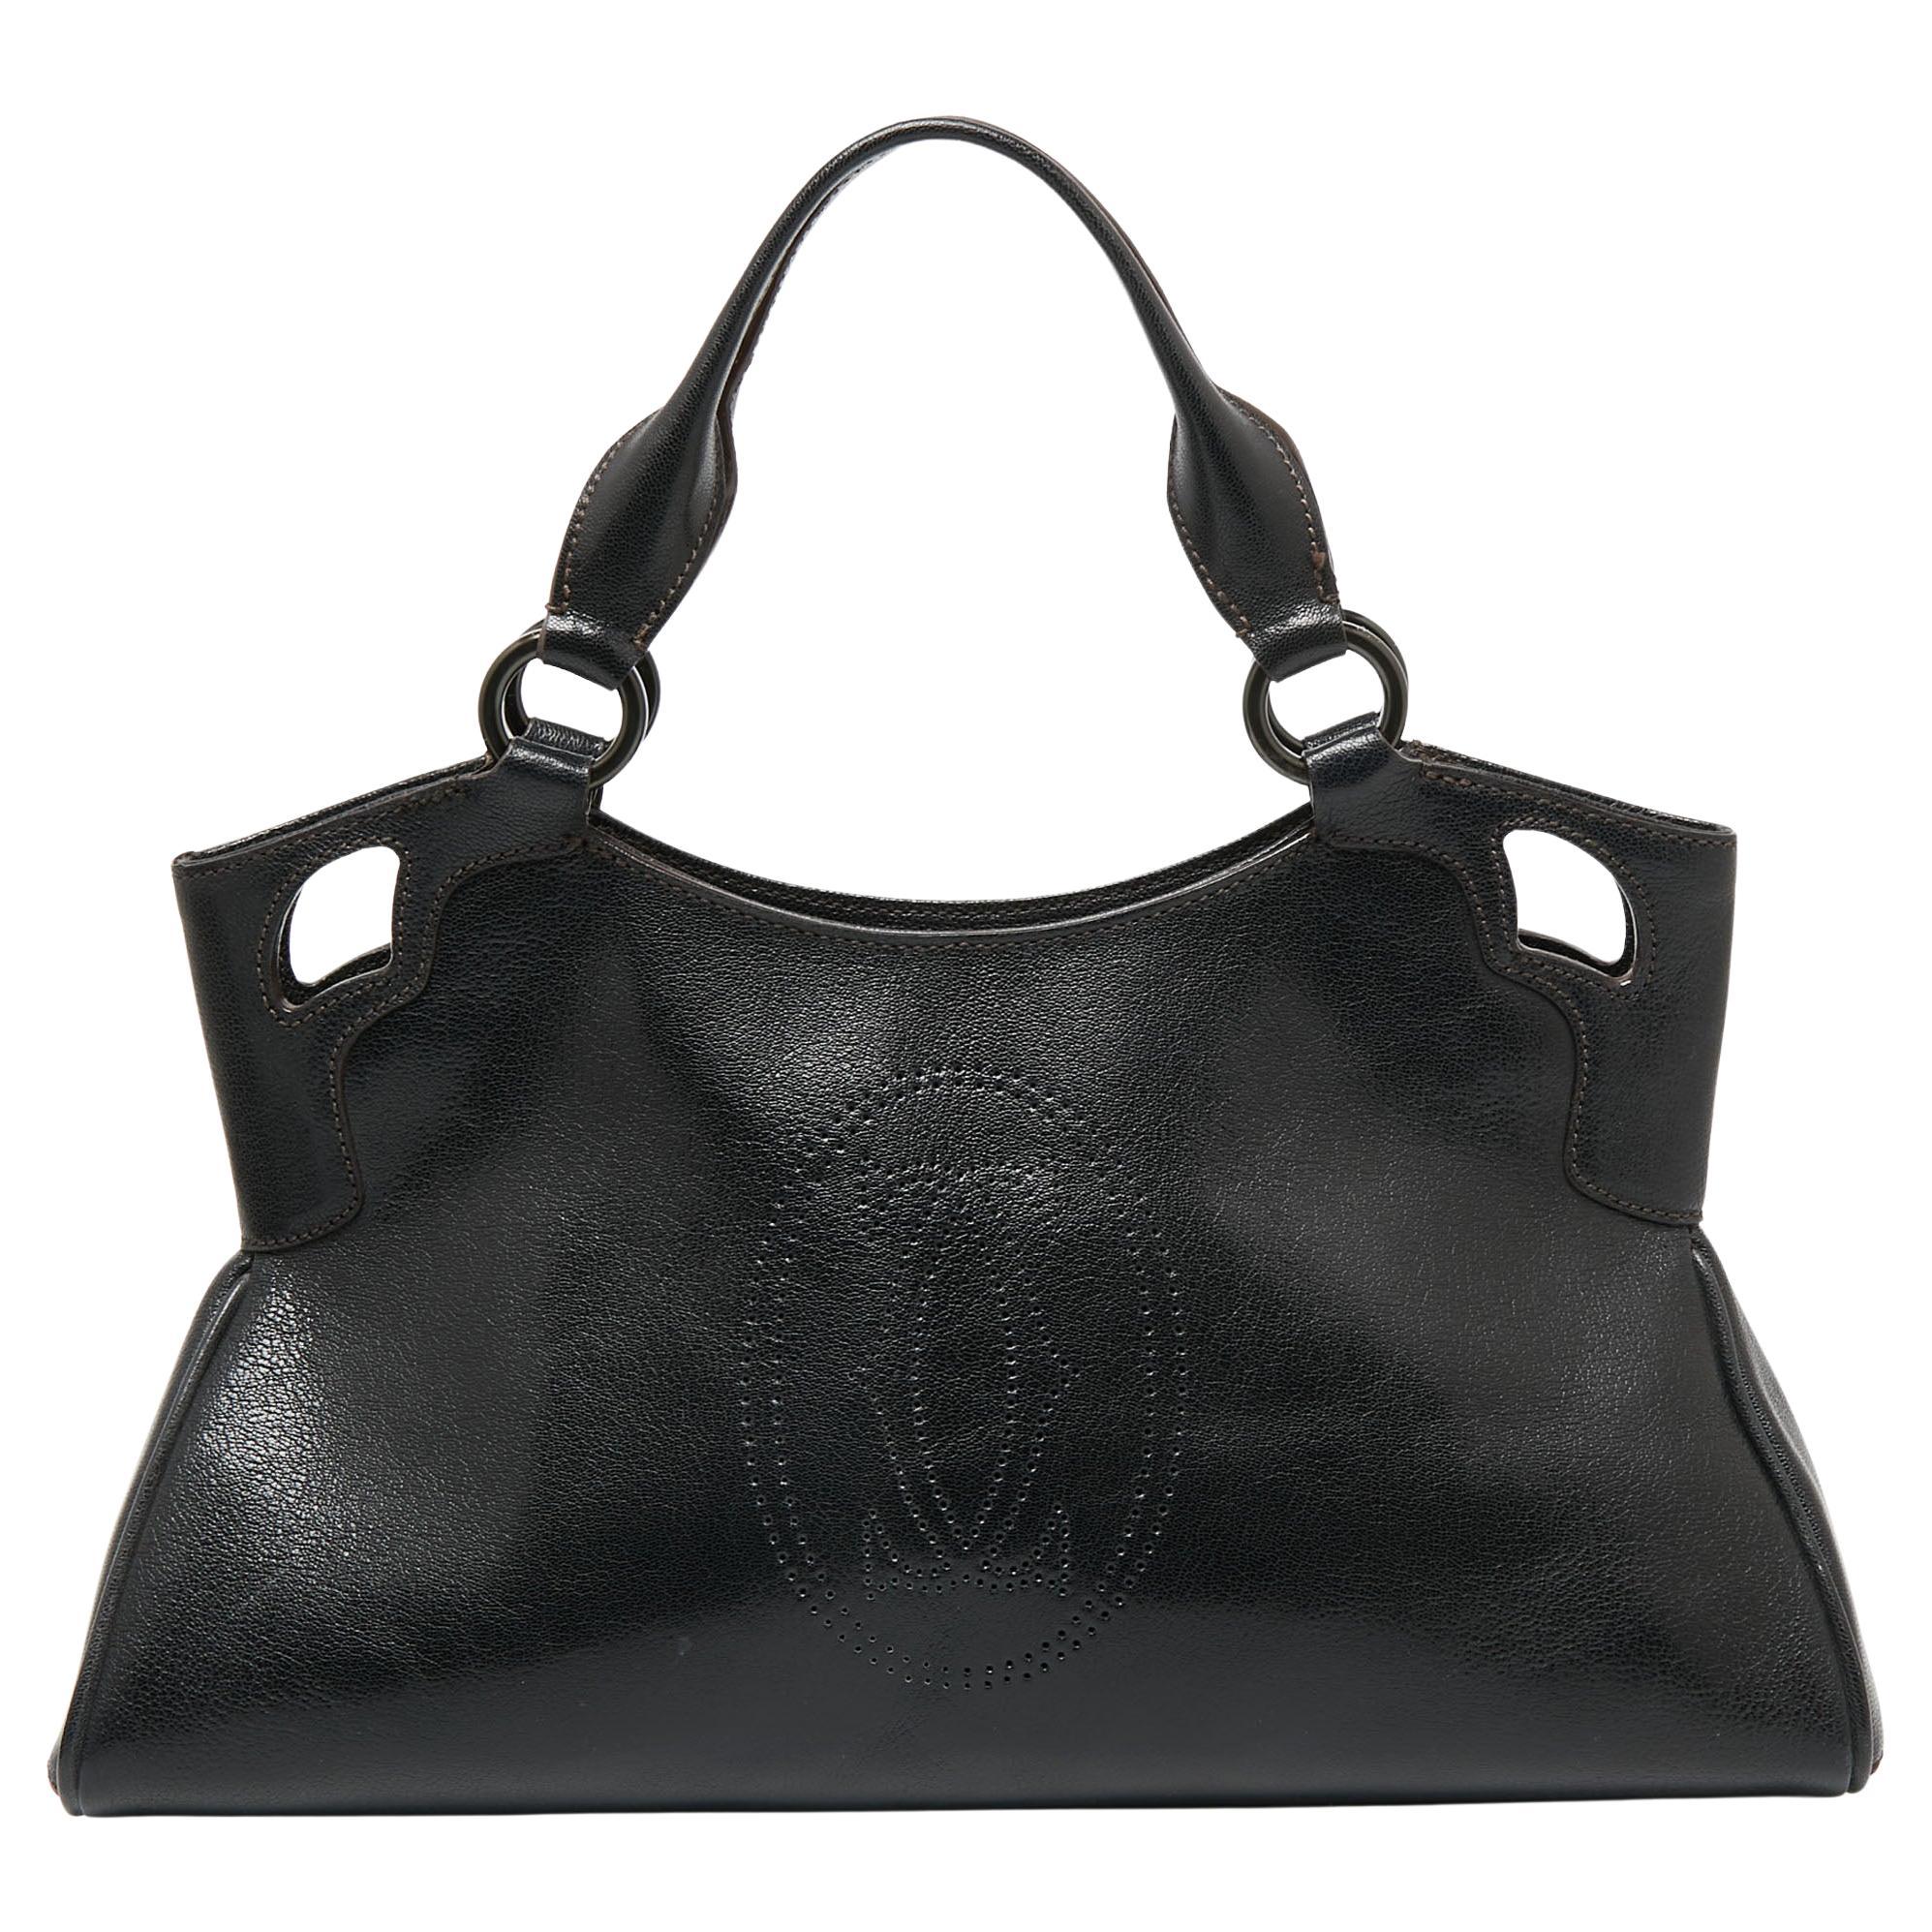 Cartier Black Leather Marcello de Cartier Bag